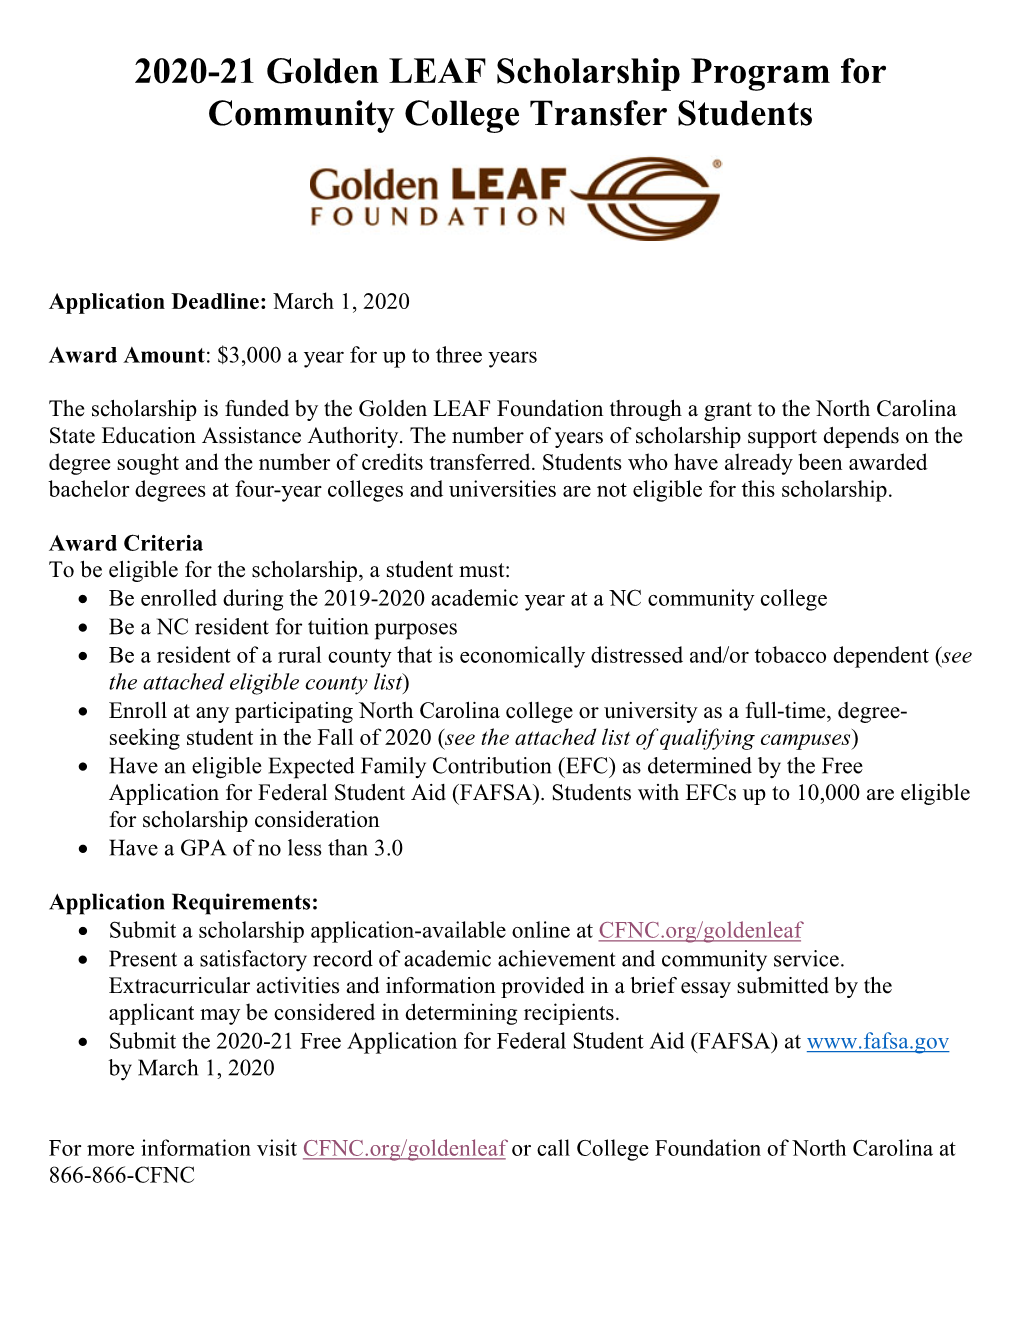 2020-21 Golden LEAF Scholarship Program for Community College Transfer Students